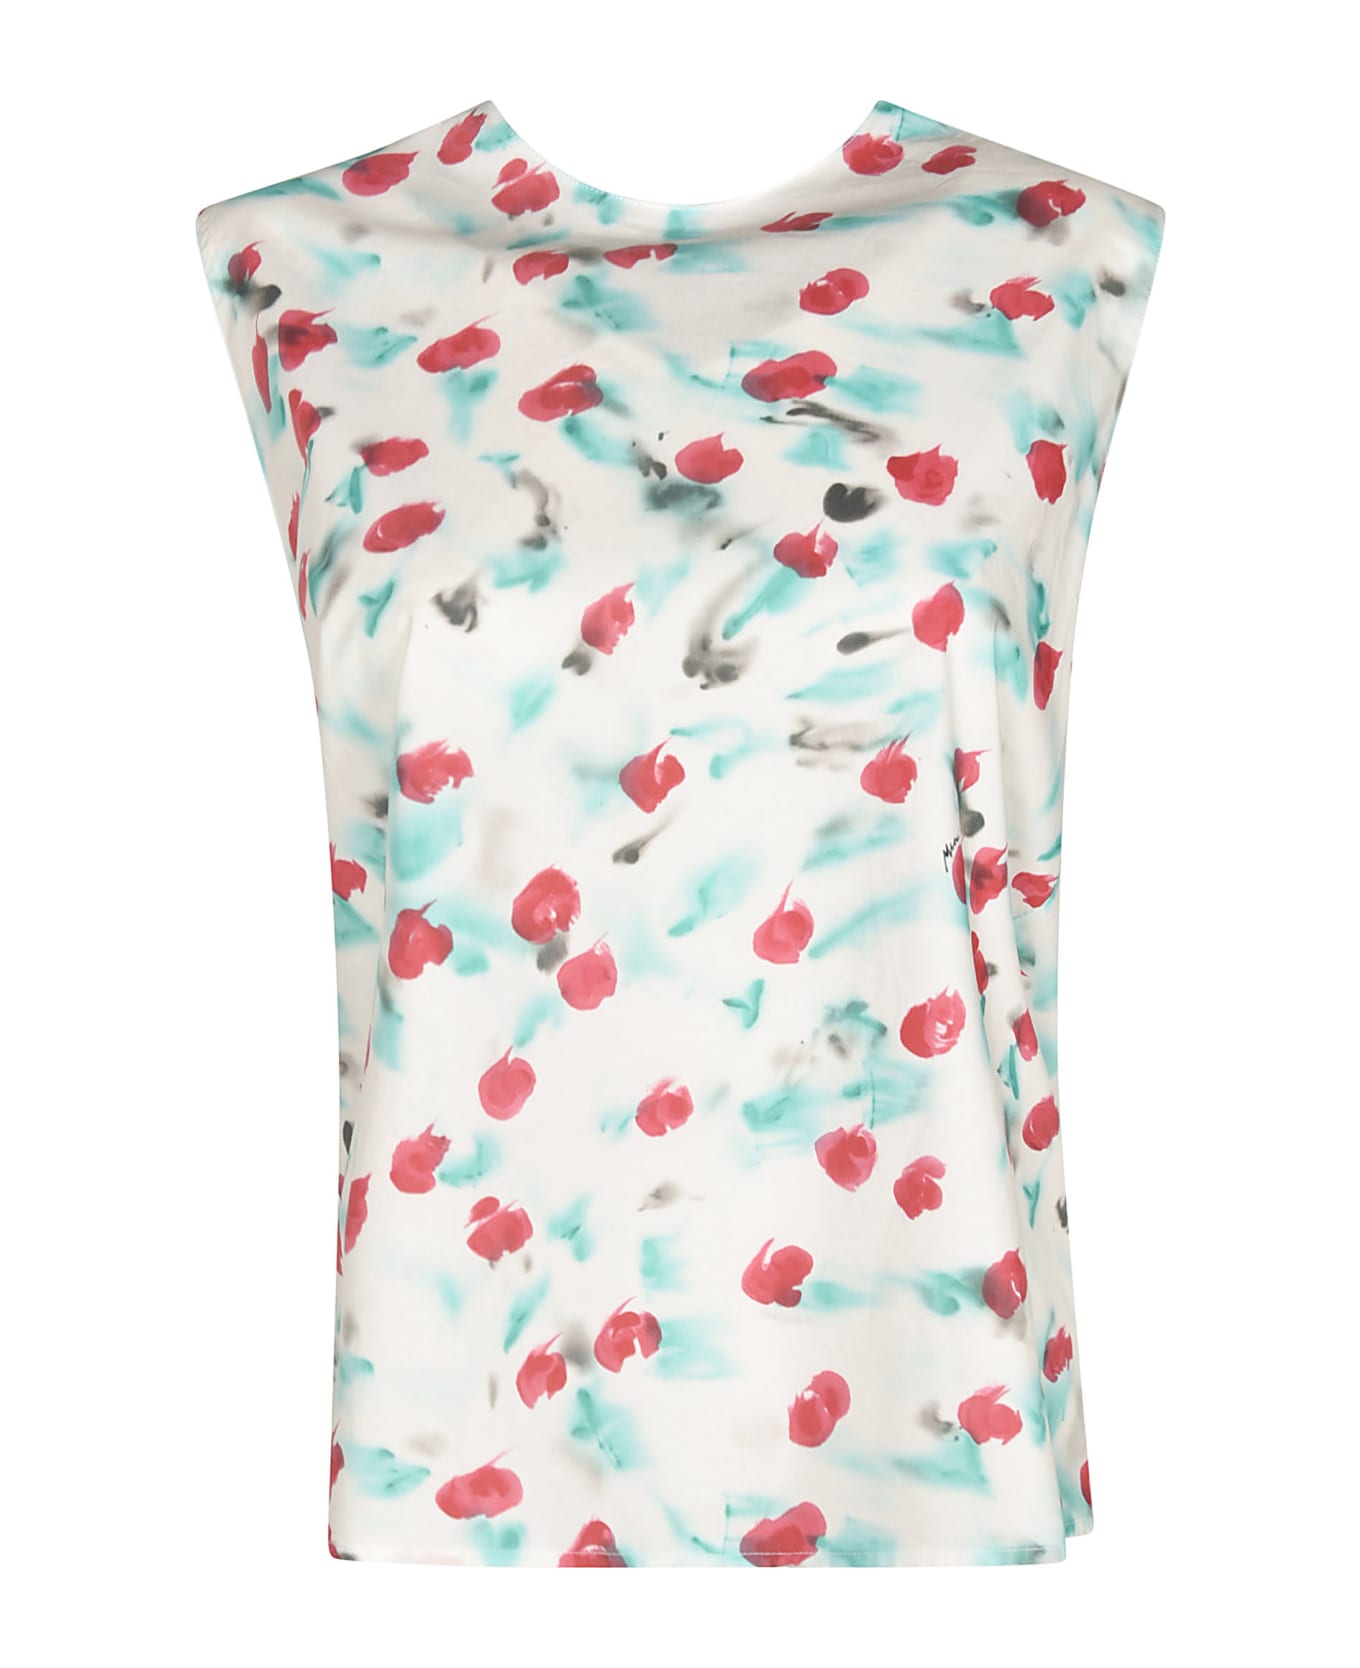 Marni Printed Sleeveless Top - Lily White